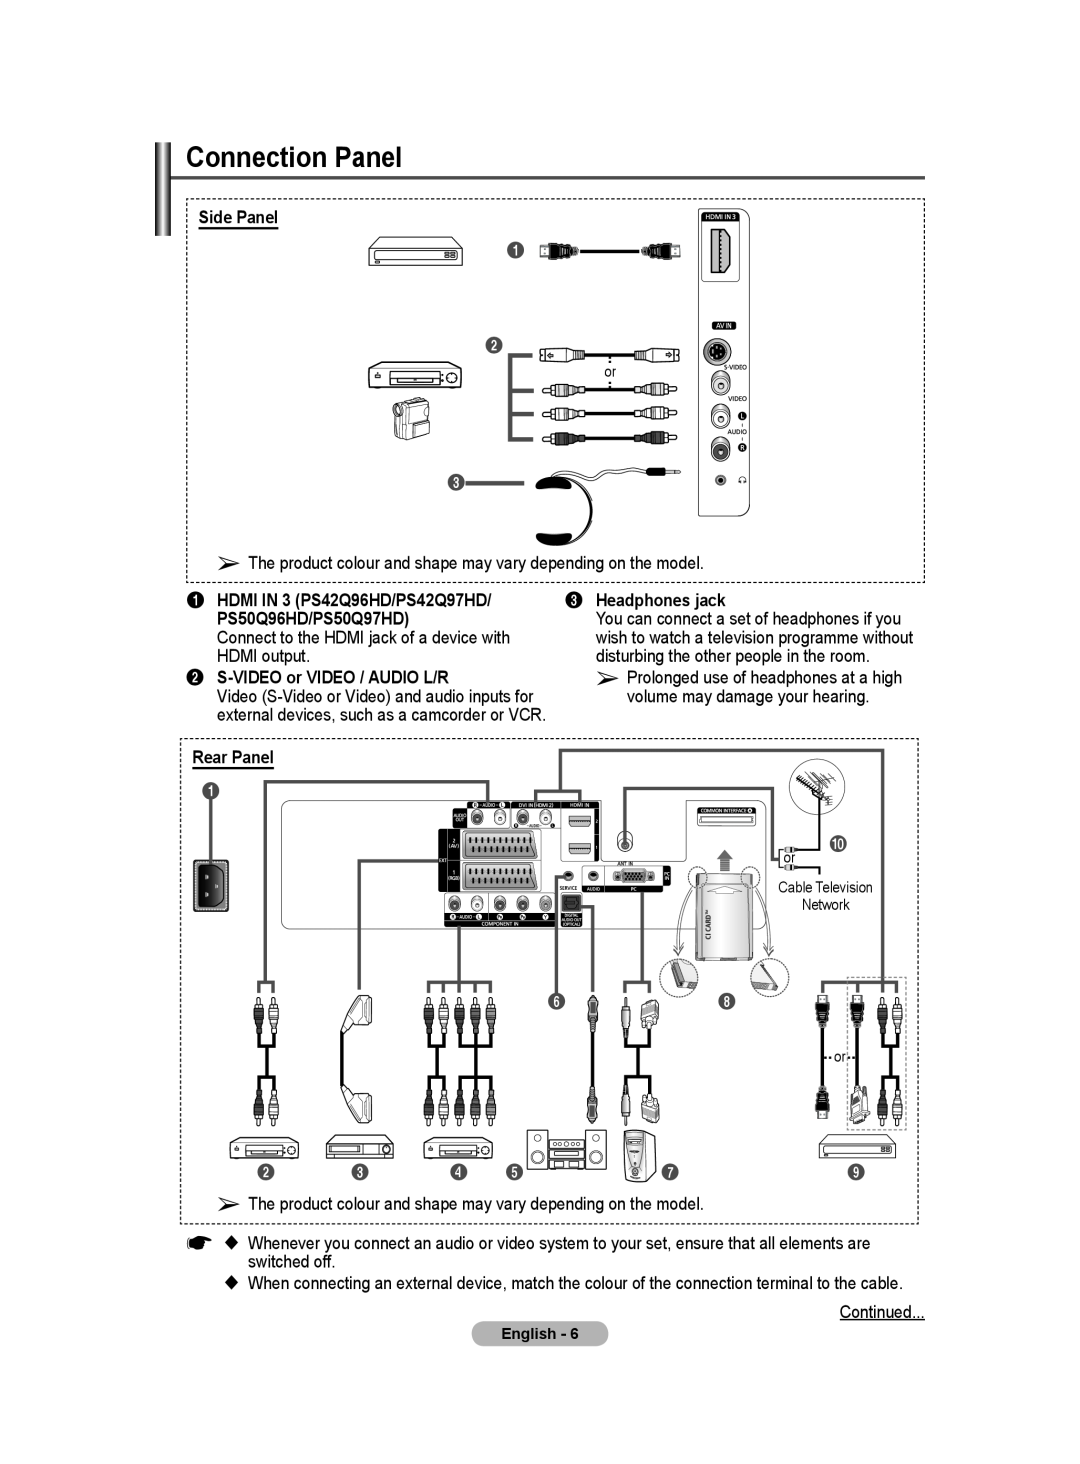 Samsung BN68-01171B-03 manual Connection Panel, Side Panel, 2S-VIDEOor VIDEO / AUDIO L/R, 3Headphones jack 